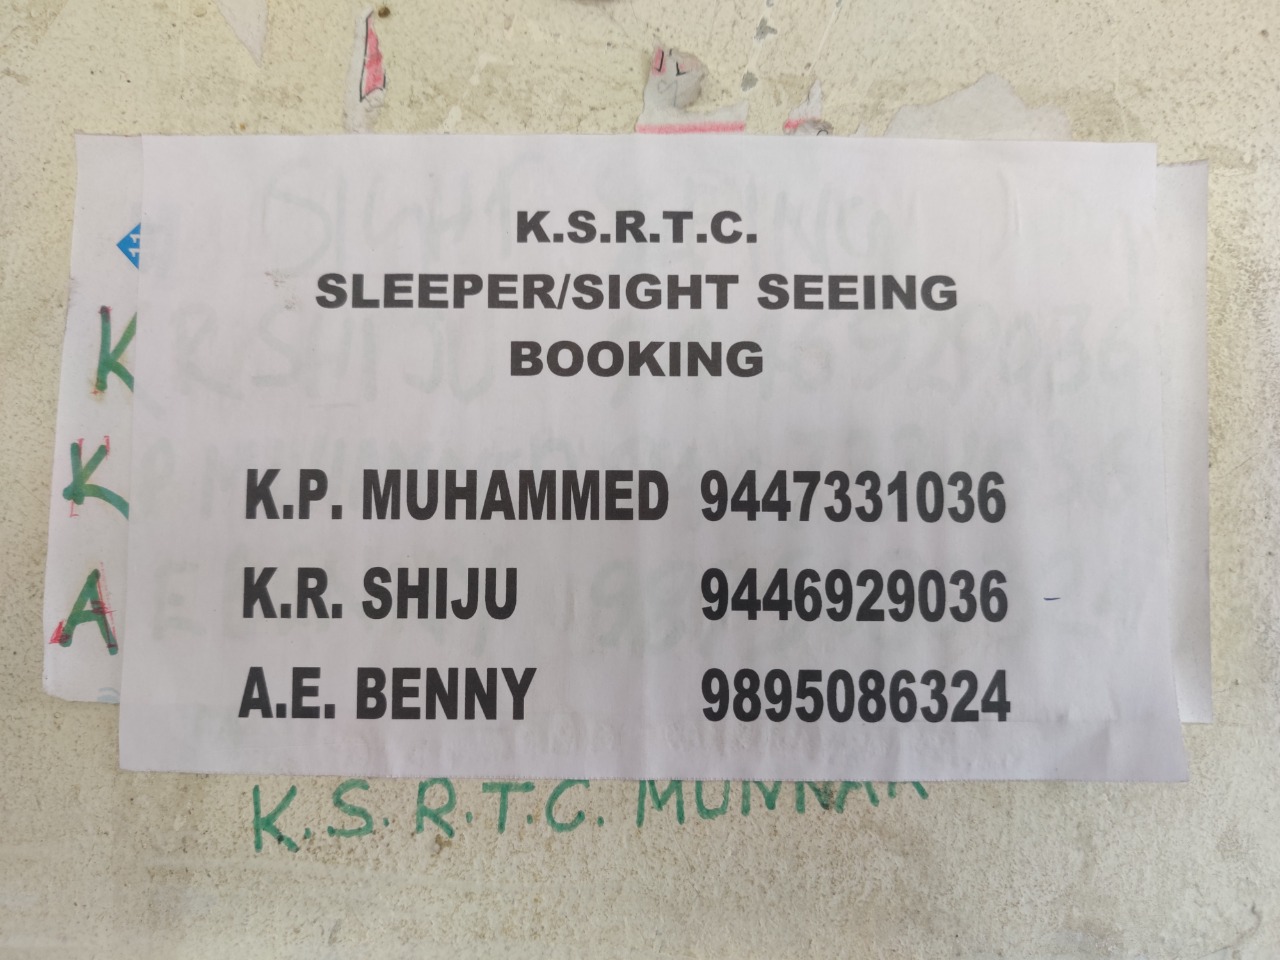 Munnar KSRTC Room Booking Contact Number